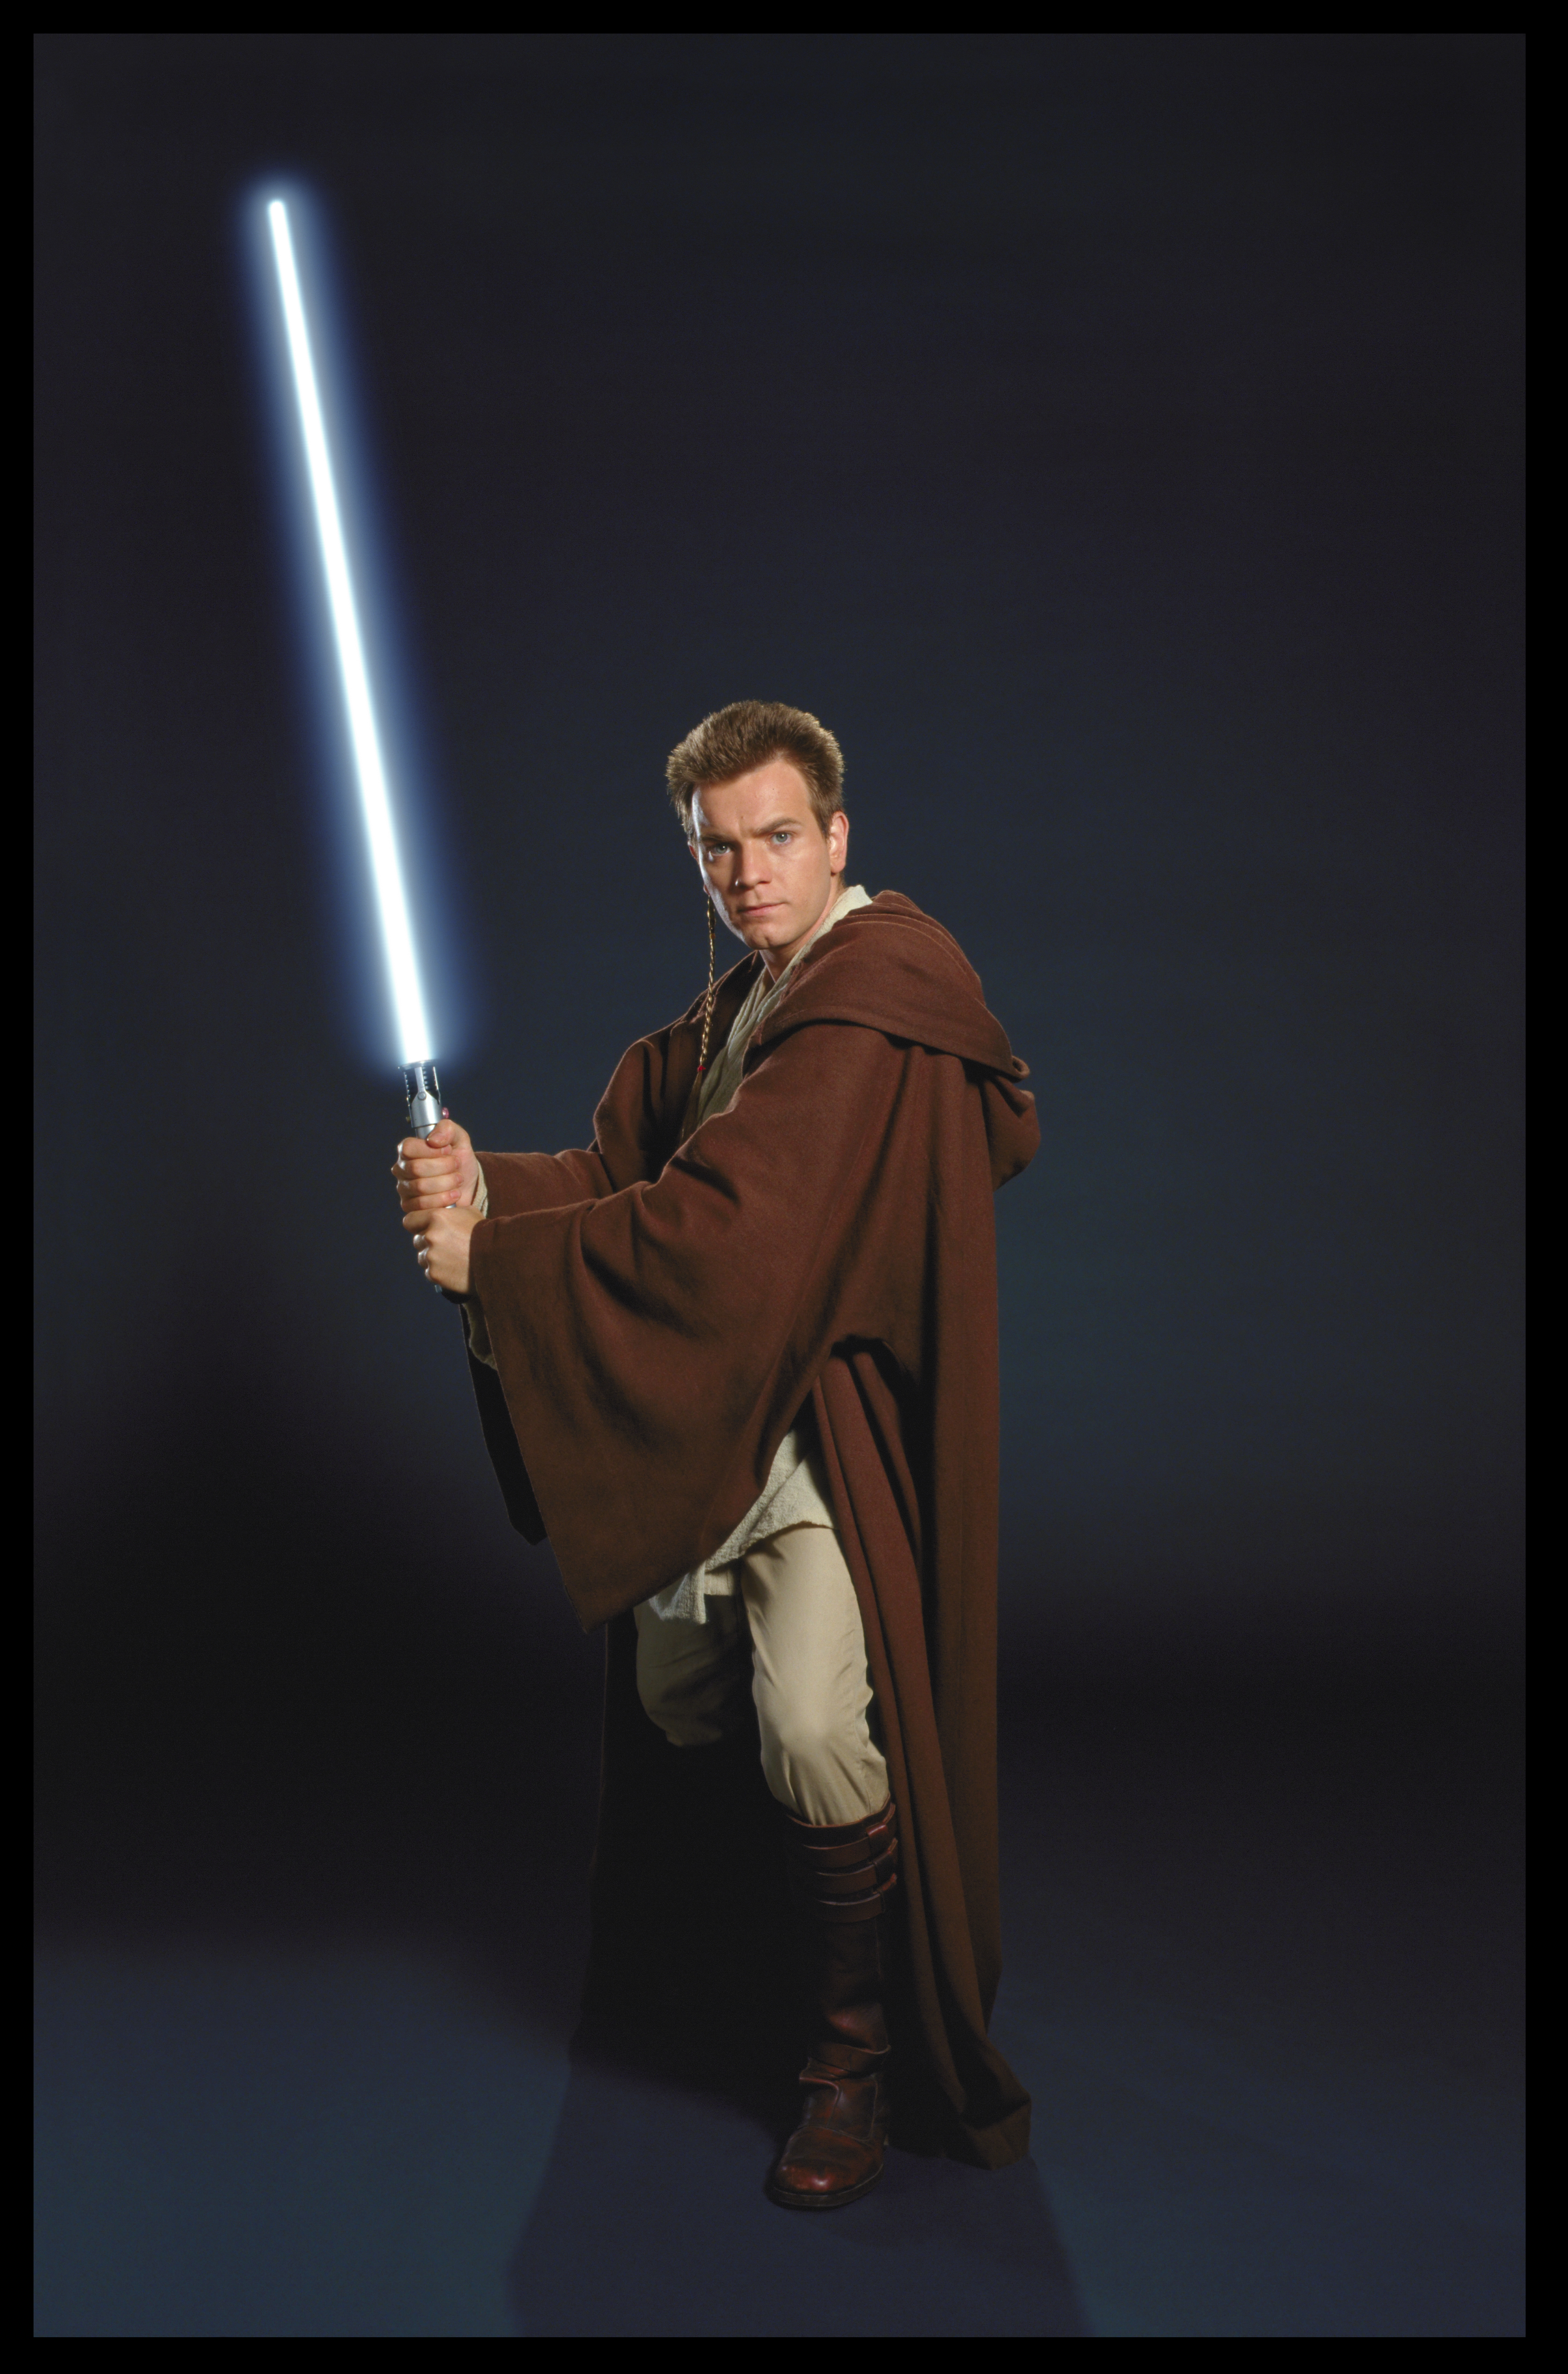 Obi-Wan Kenobi - Wikipedia